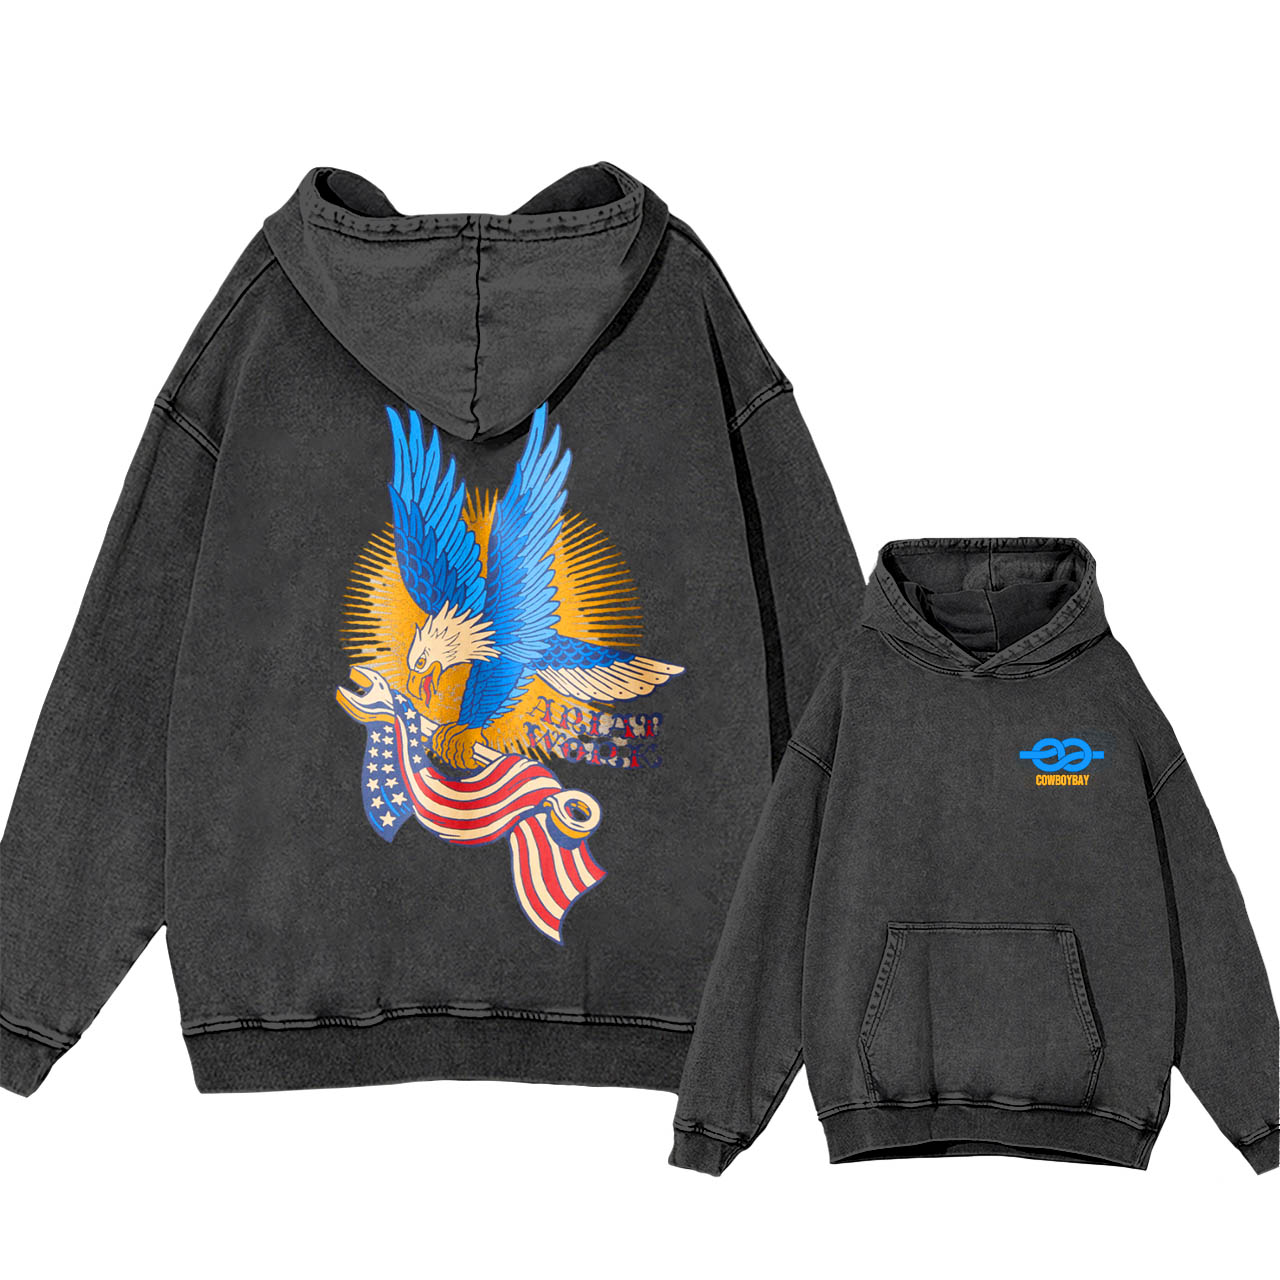 Rebar Victory Cowboybay Eagle Garment-Dye Hoodies